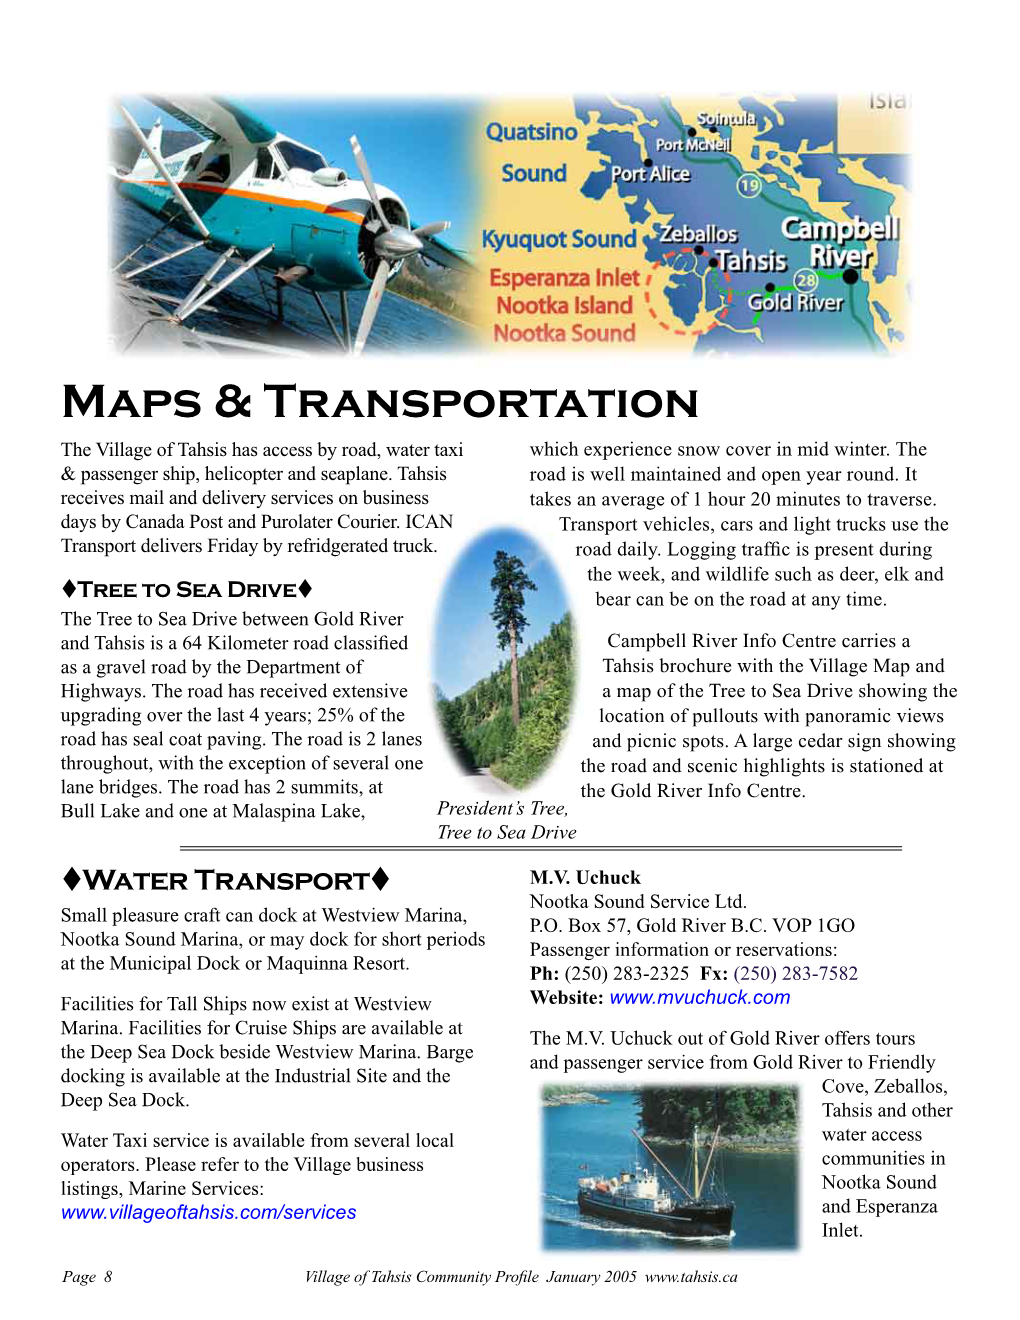 Maps & Transportation